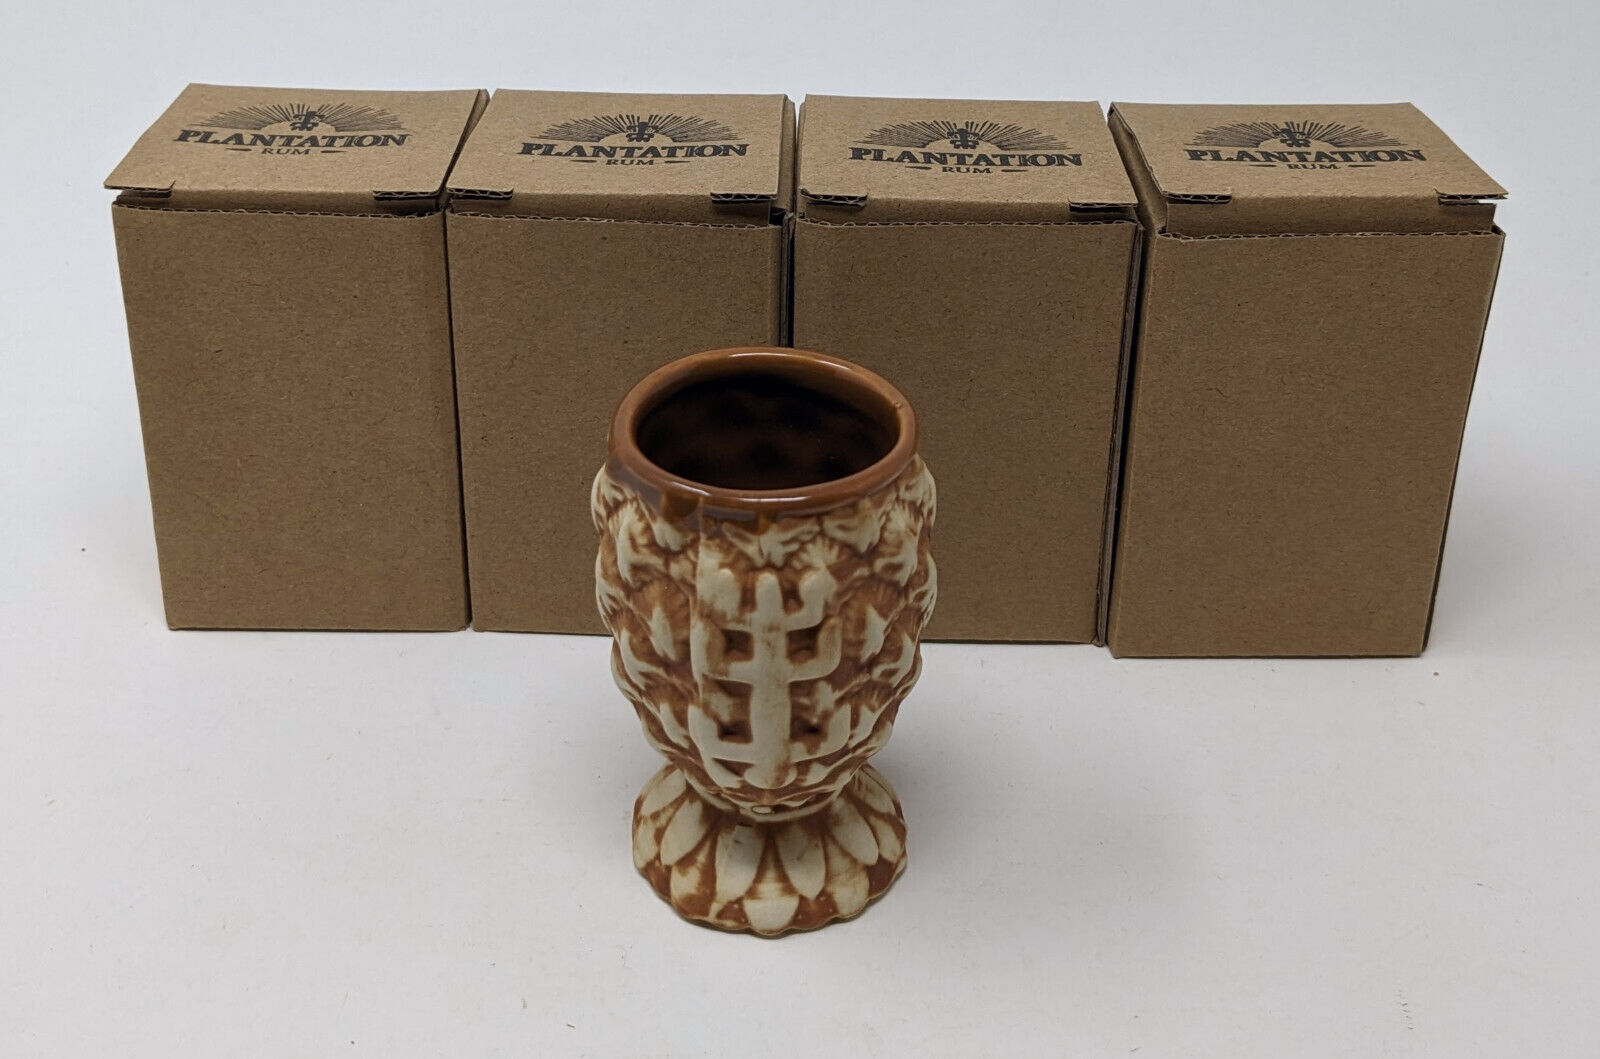 Plantation Rum Stiggins Pineapple Terracotta Shot Glass Set of 4 - New with Box